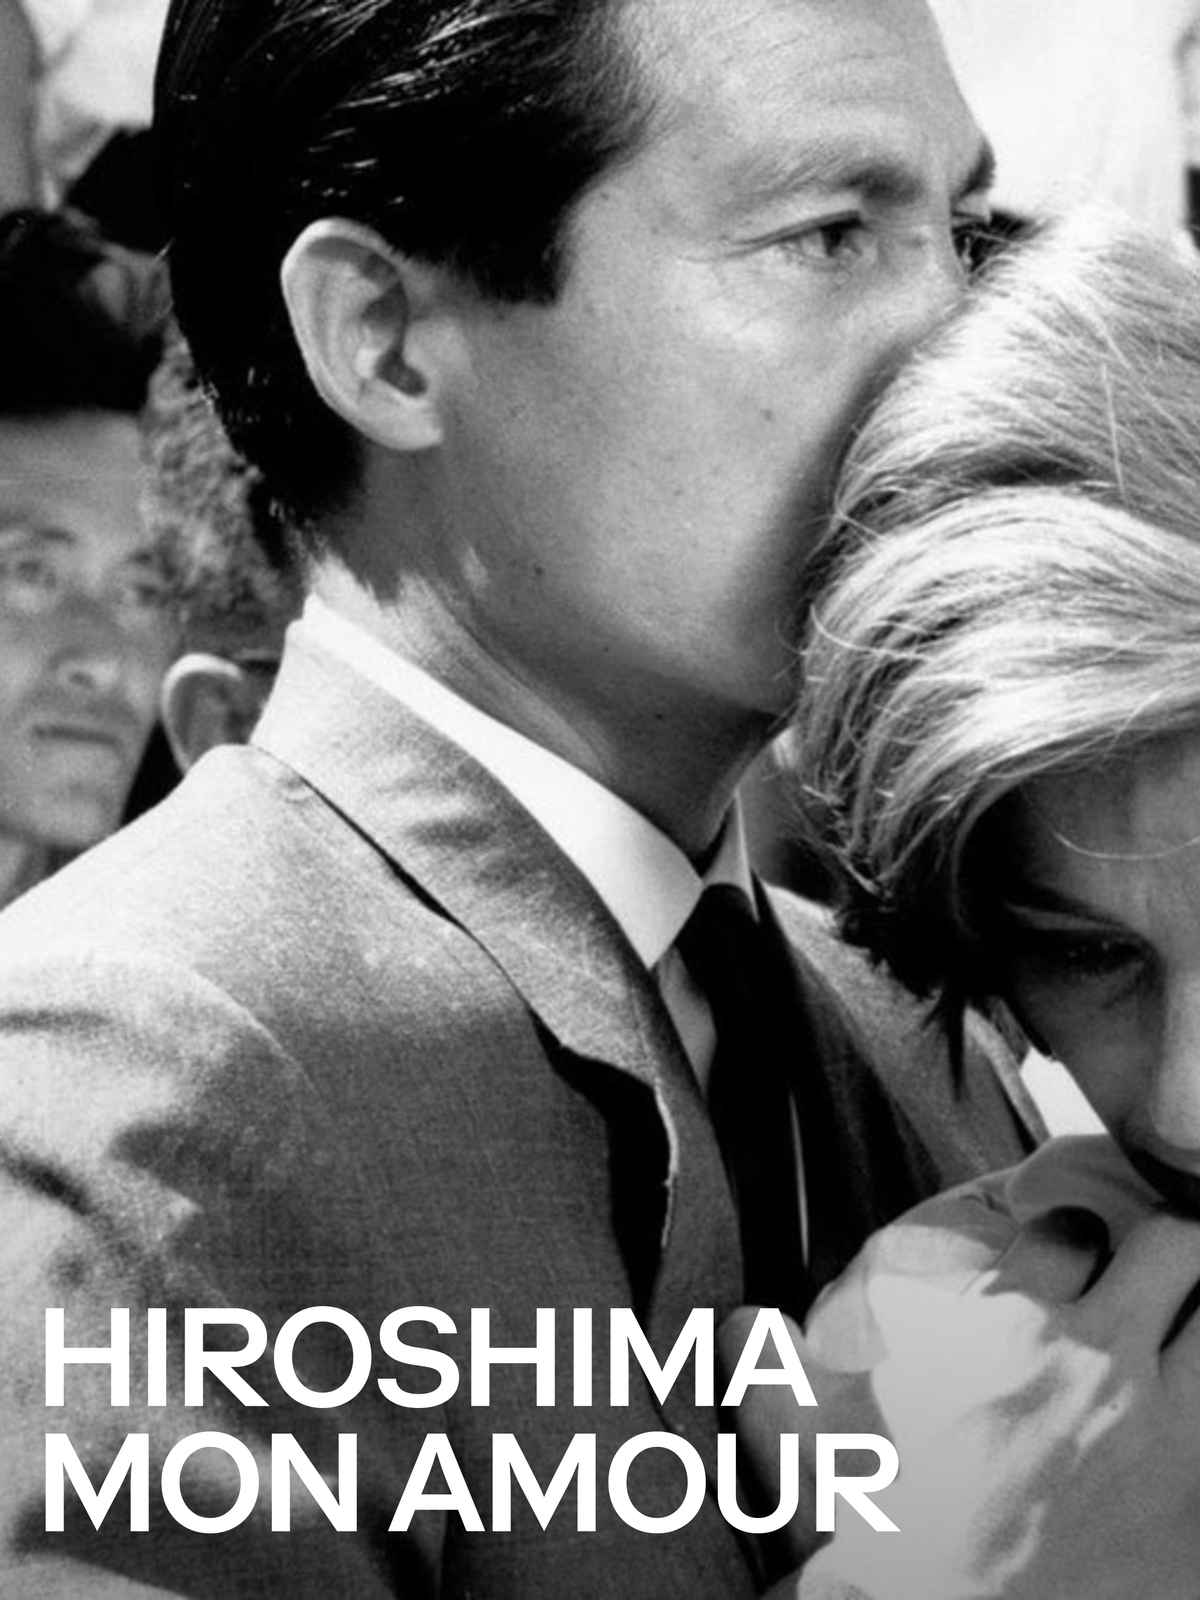 In dating Hiroshima advice Dating Tips